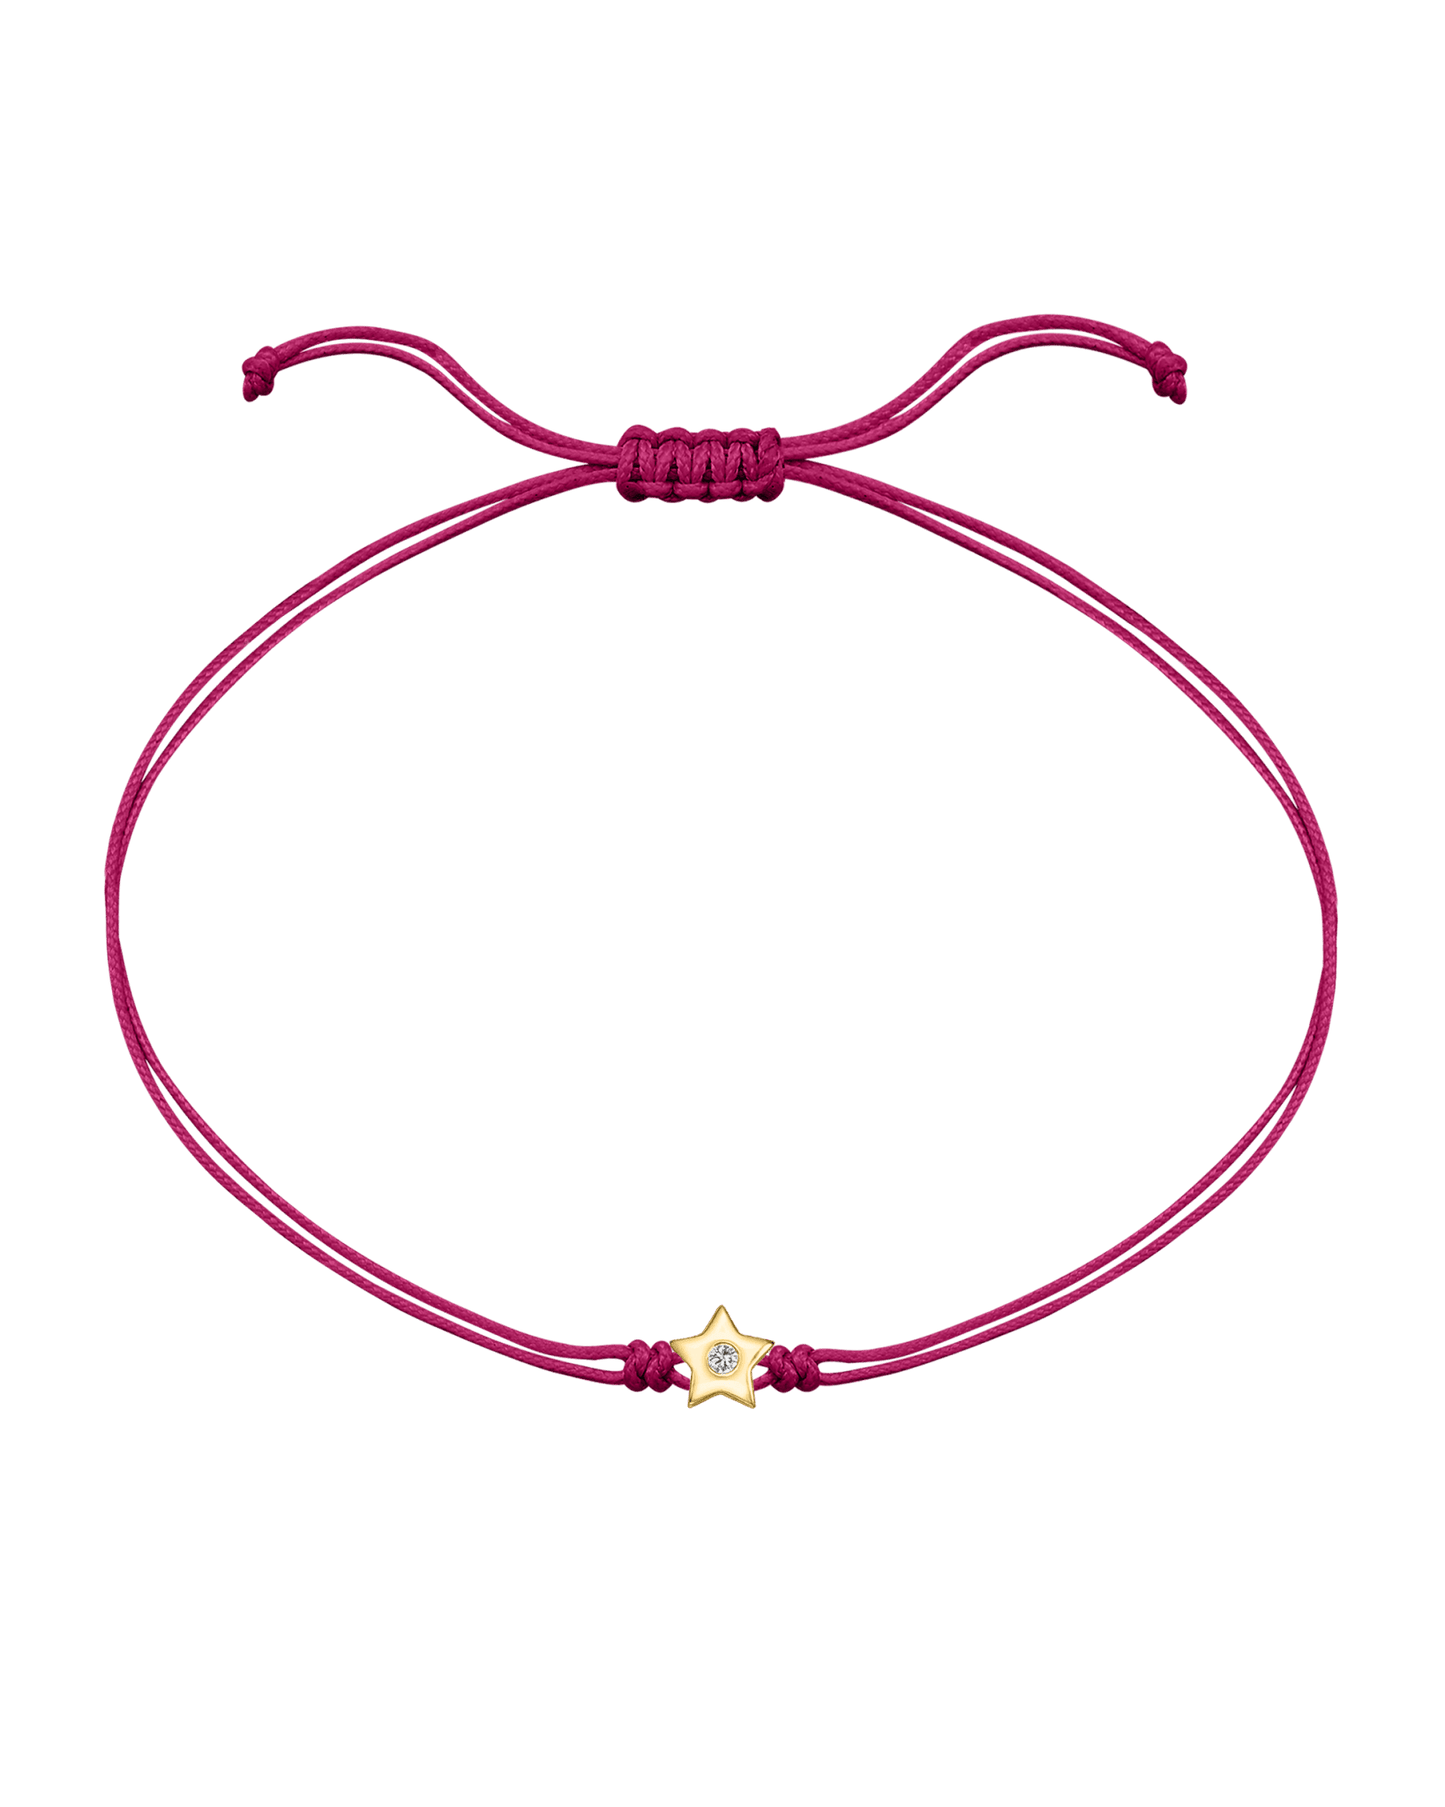 Star Diamond String Of Love - 14K Yellow Gold Bracelet 14K Solid Gold Pink 